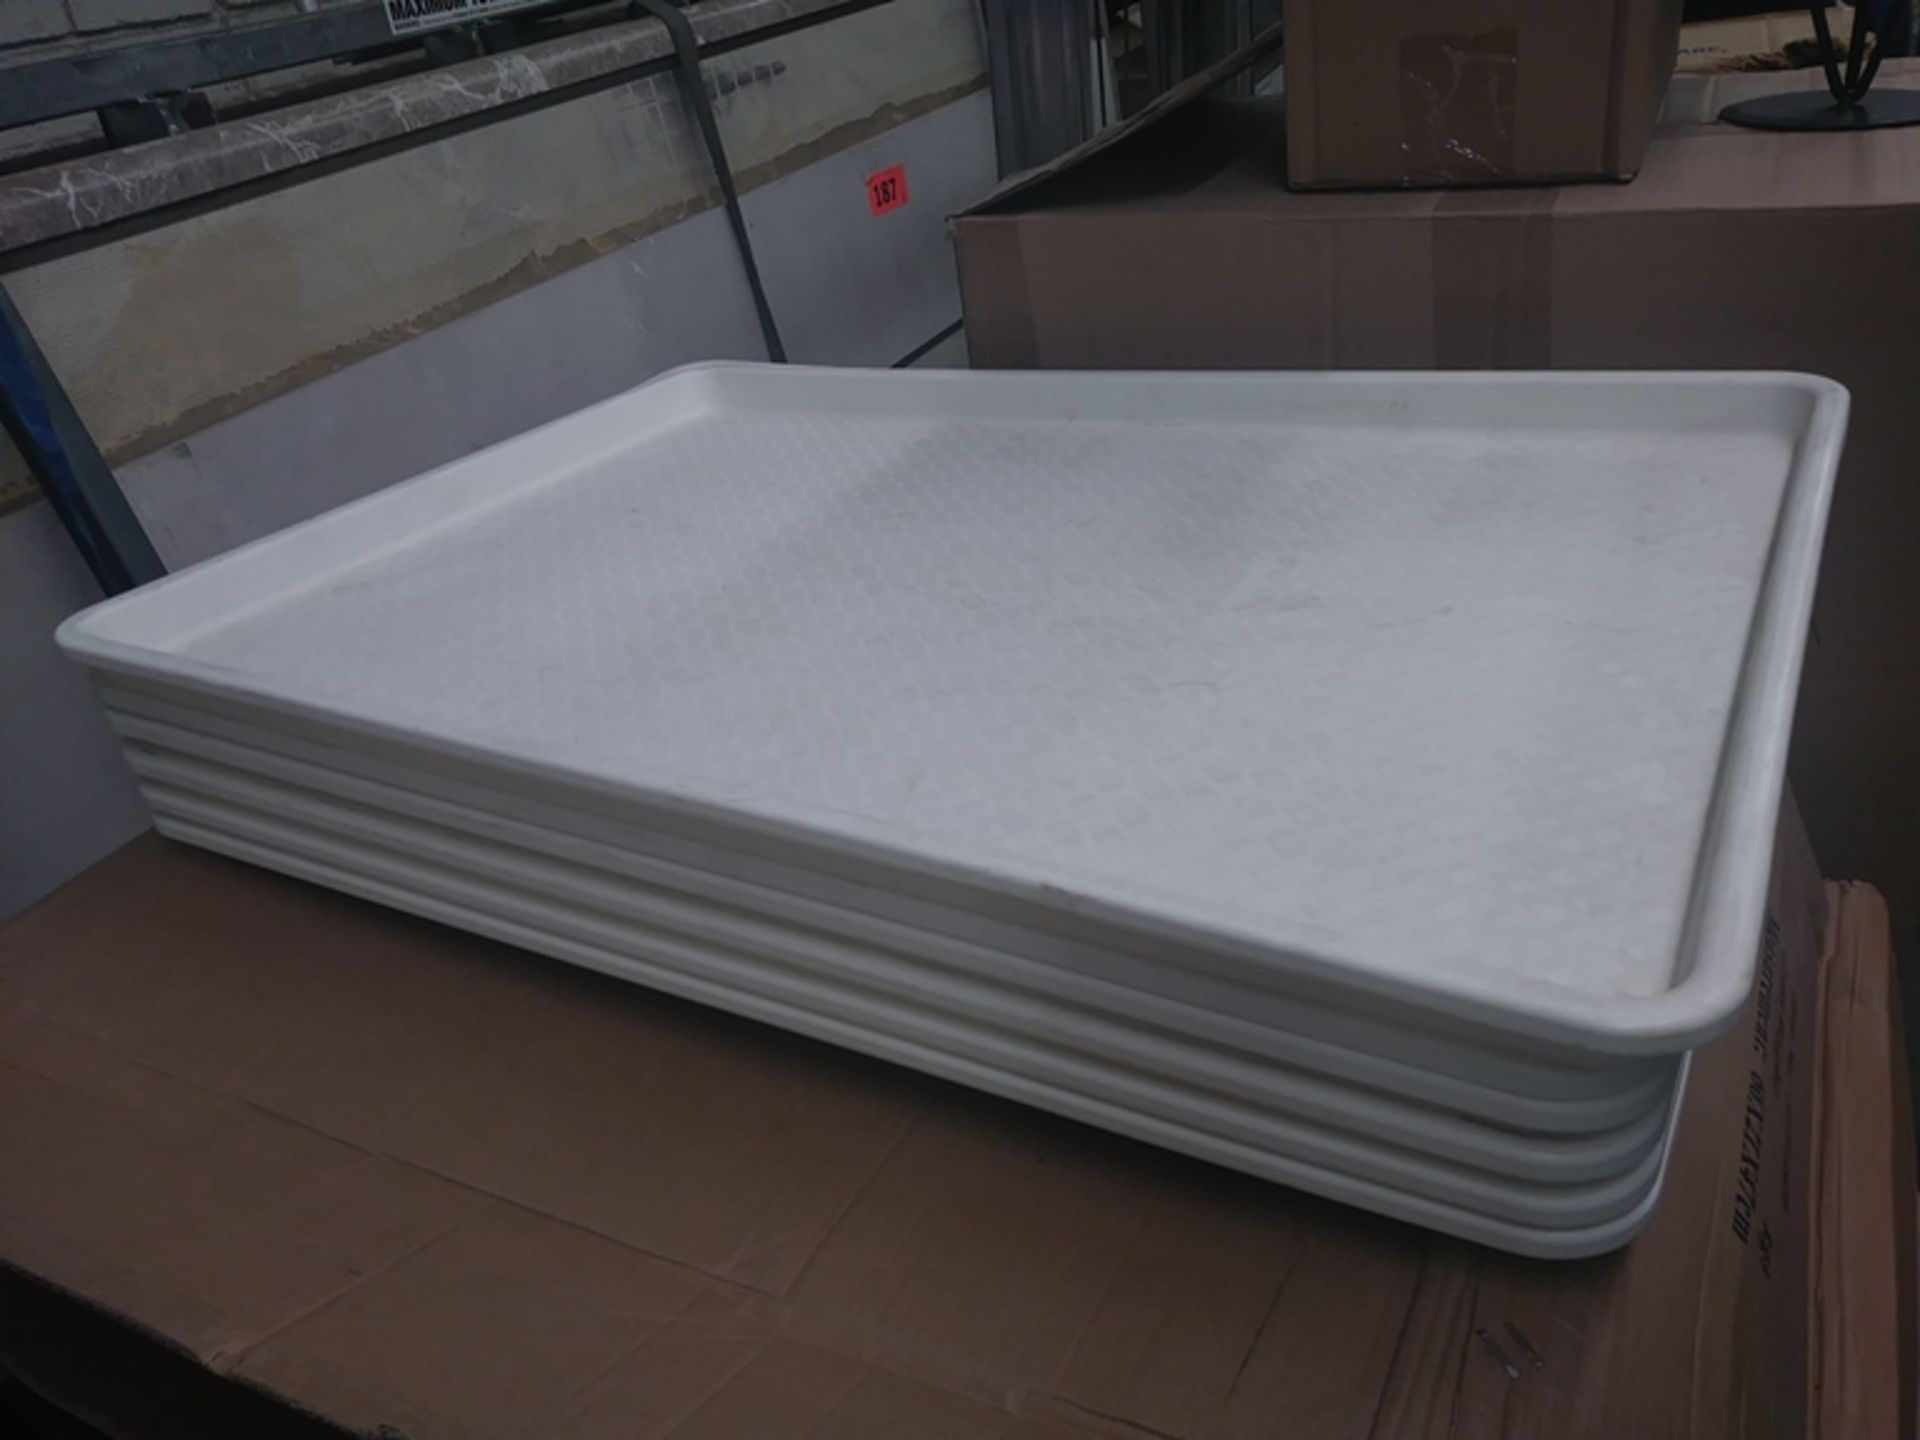 WINCO WHITE PLASTIC TRAYS (25" x 18") (QTY X YOUR BID) - 1 qty = 1 box of 9 trays